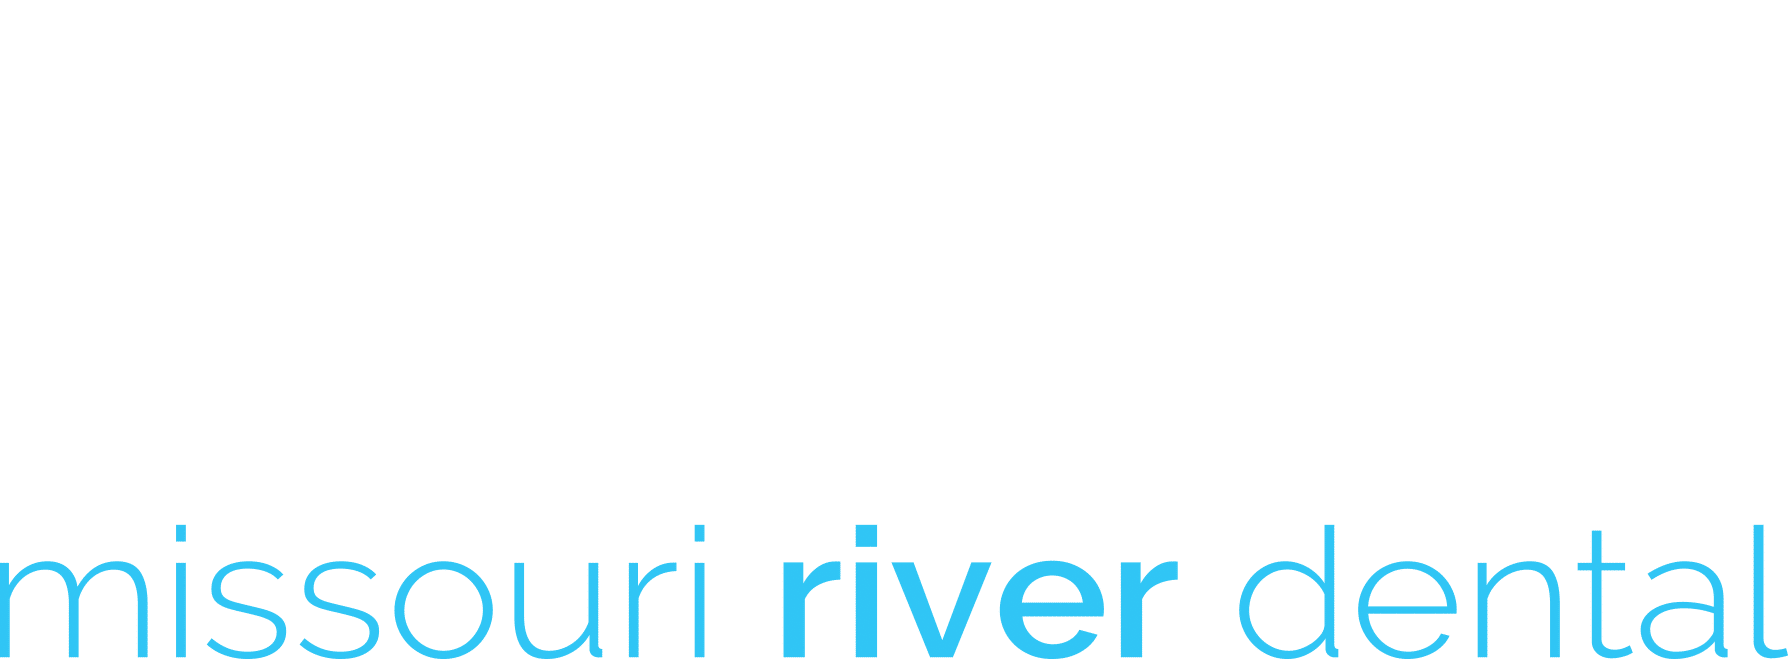 MRD Logo 2 Color